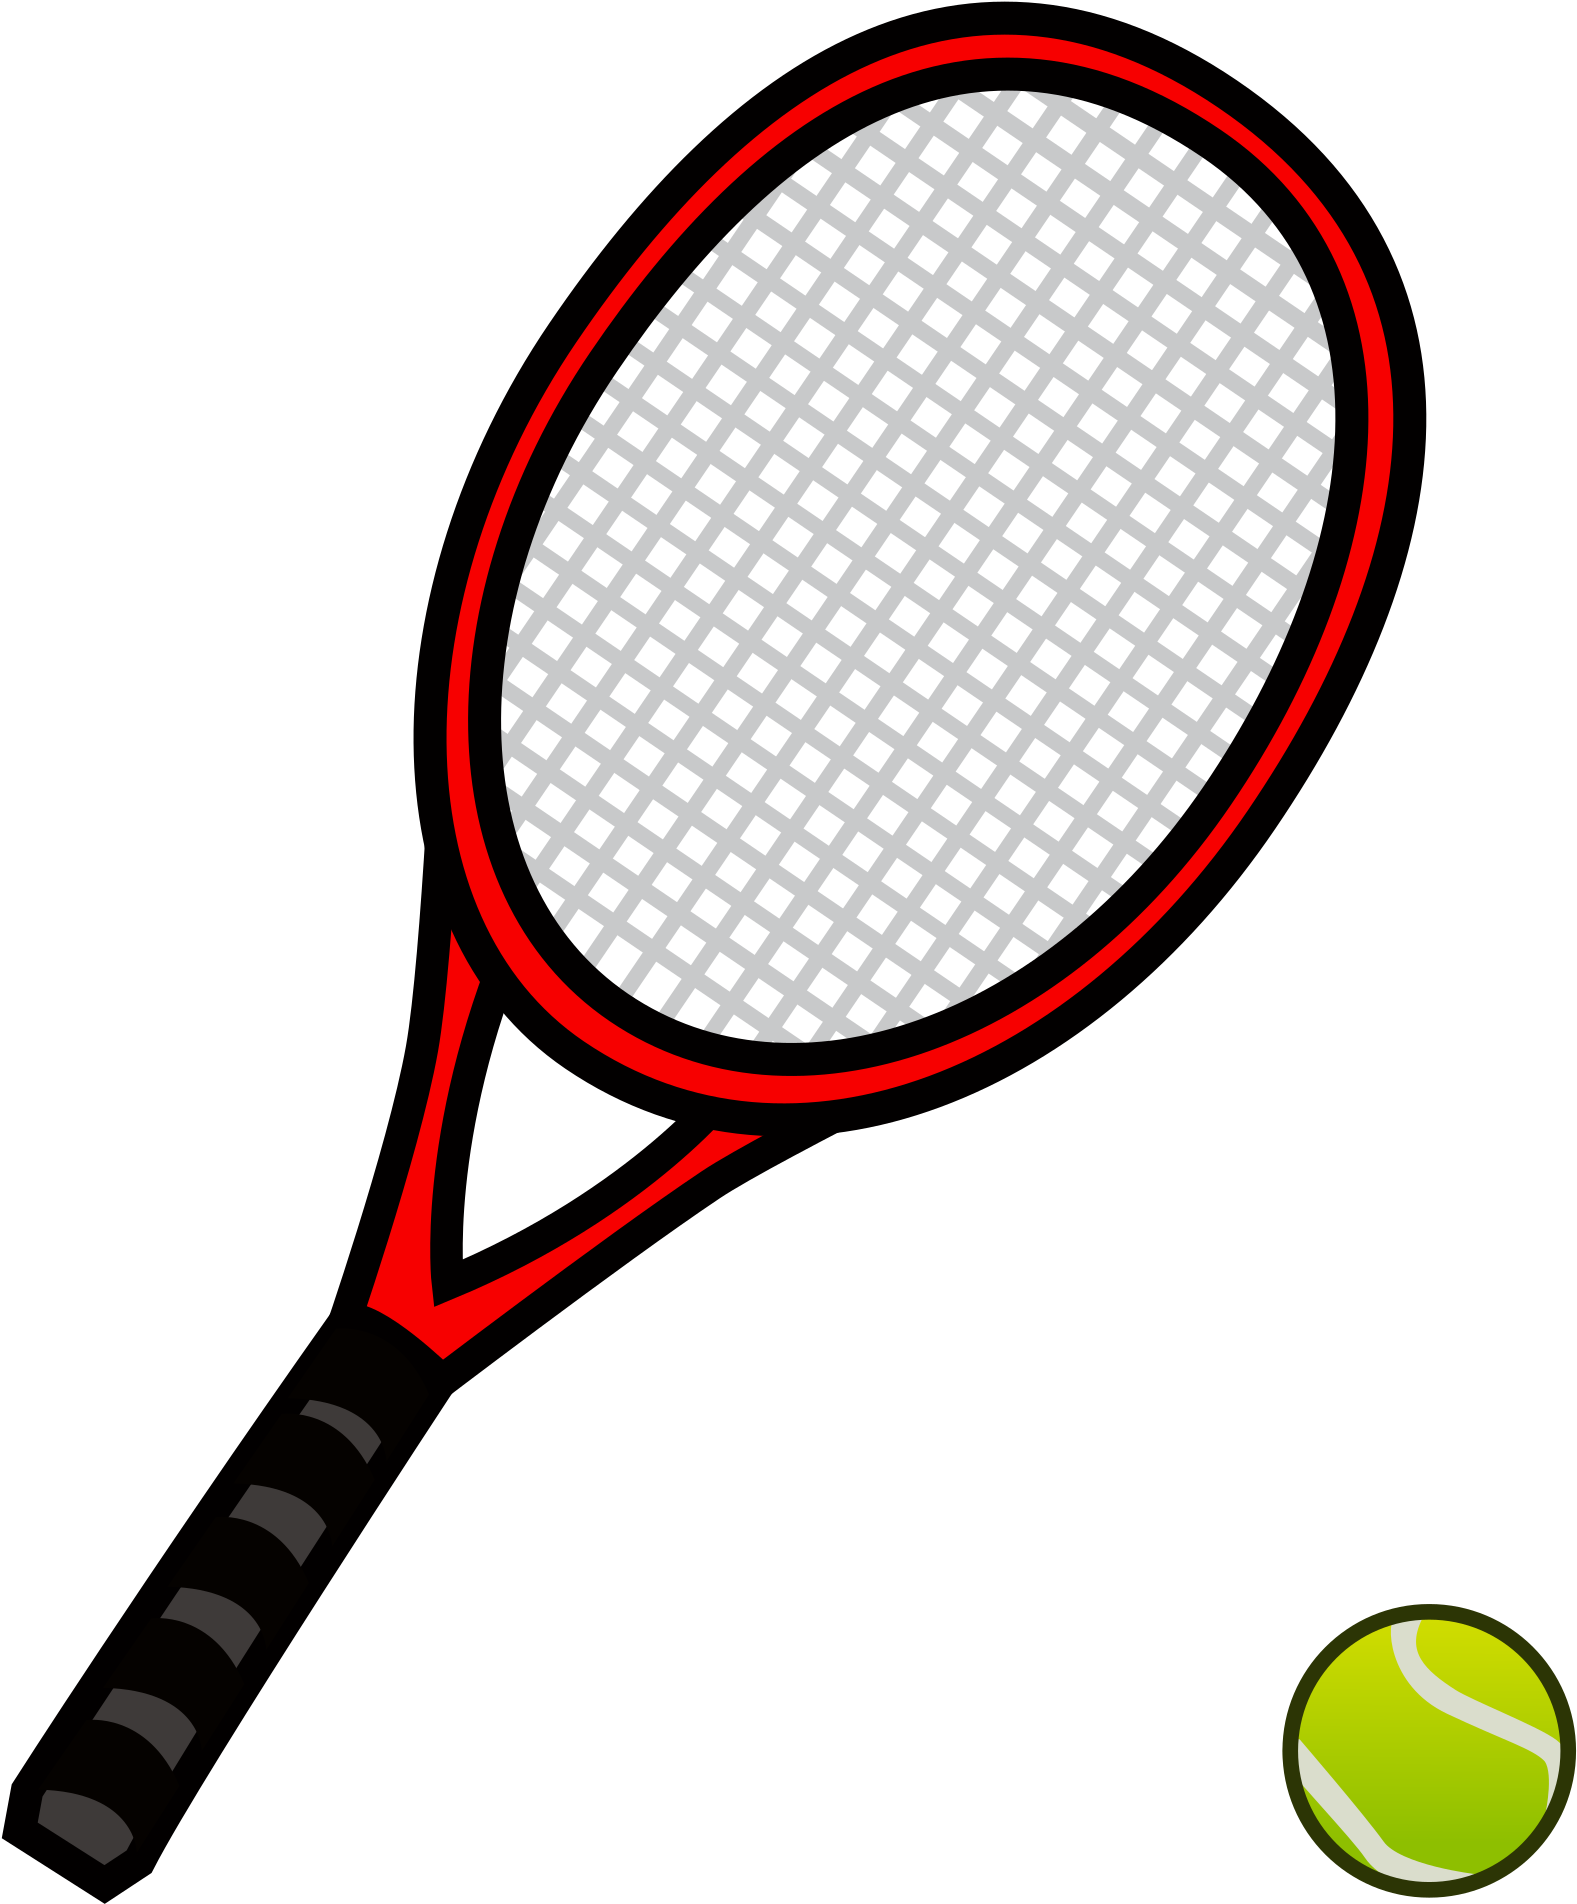 Tennis Racket And Ball 29, Buy Clip Art.